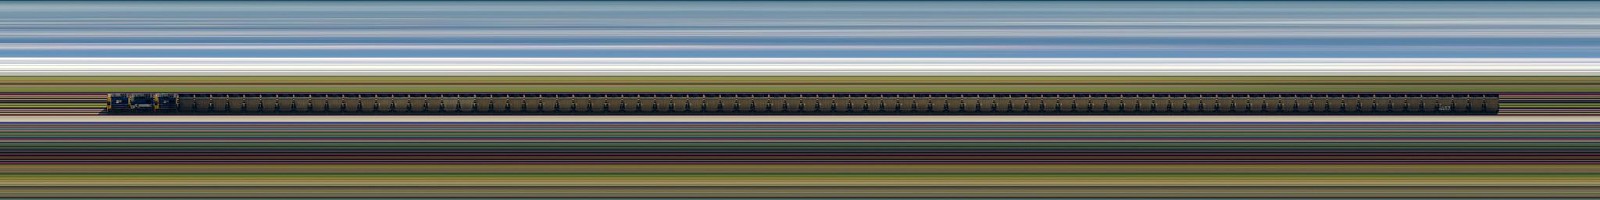 Jay Mark Johnson, HUNTER VALLEY #14, 2012 Australia
archival pigment on paper, mounted on aluminum, 40 x 300 in. (101.6 x 762 cm)